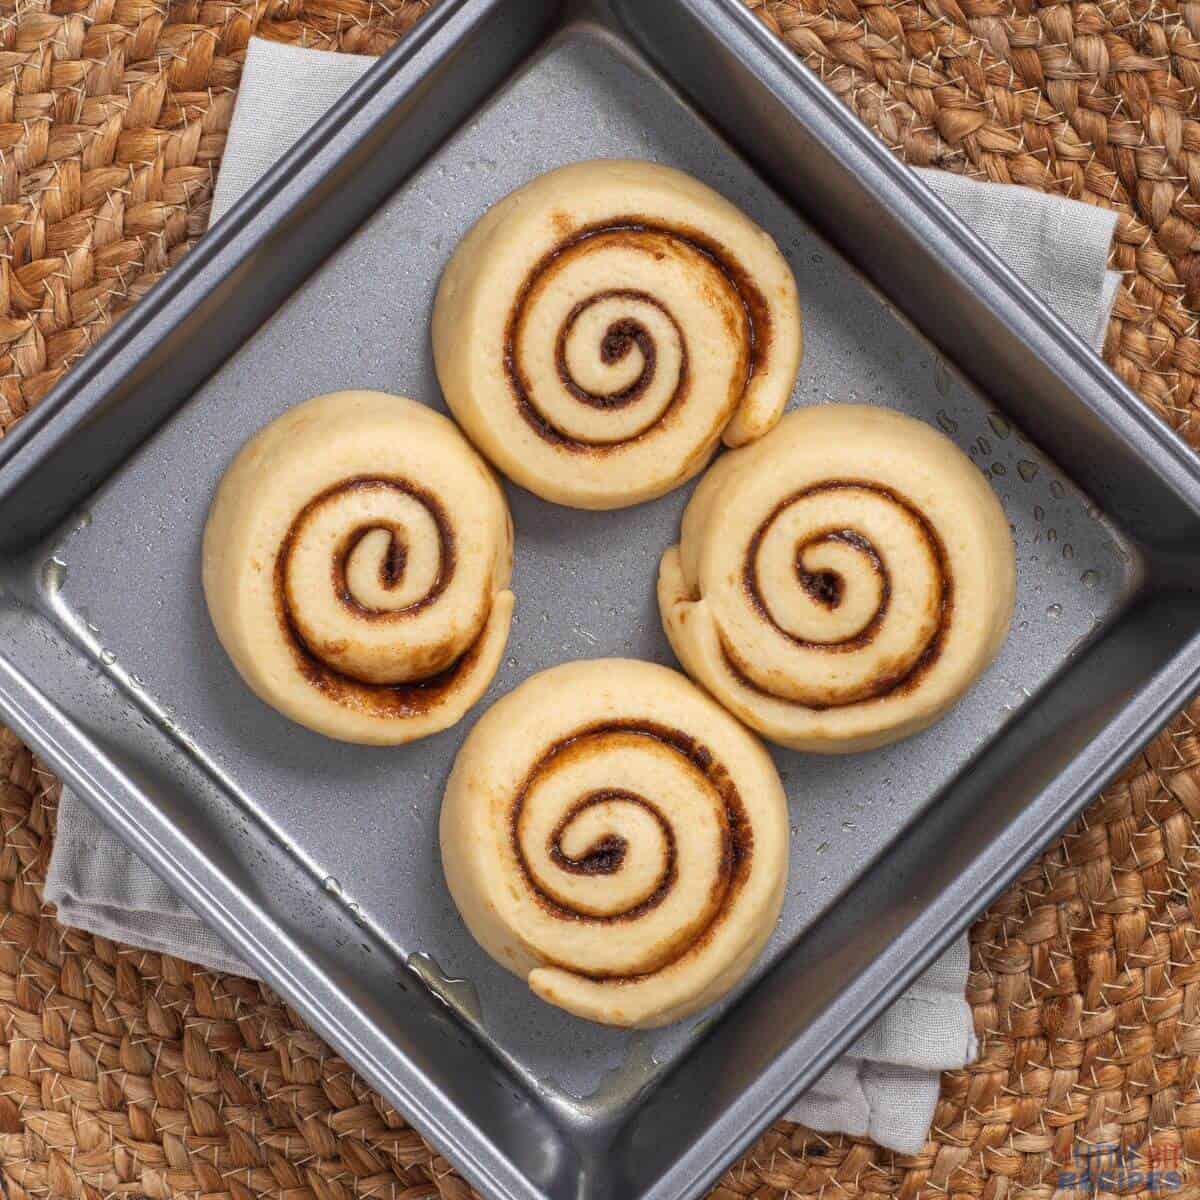 unbaked cinnamon rolls in baking pan.